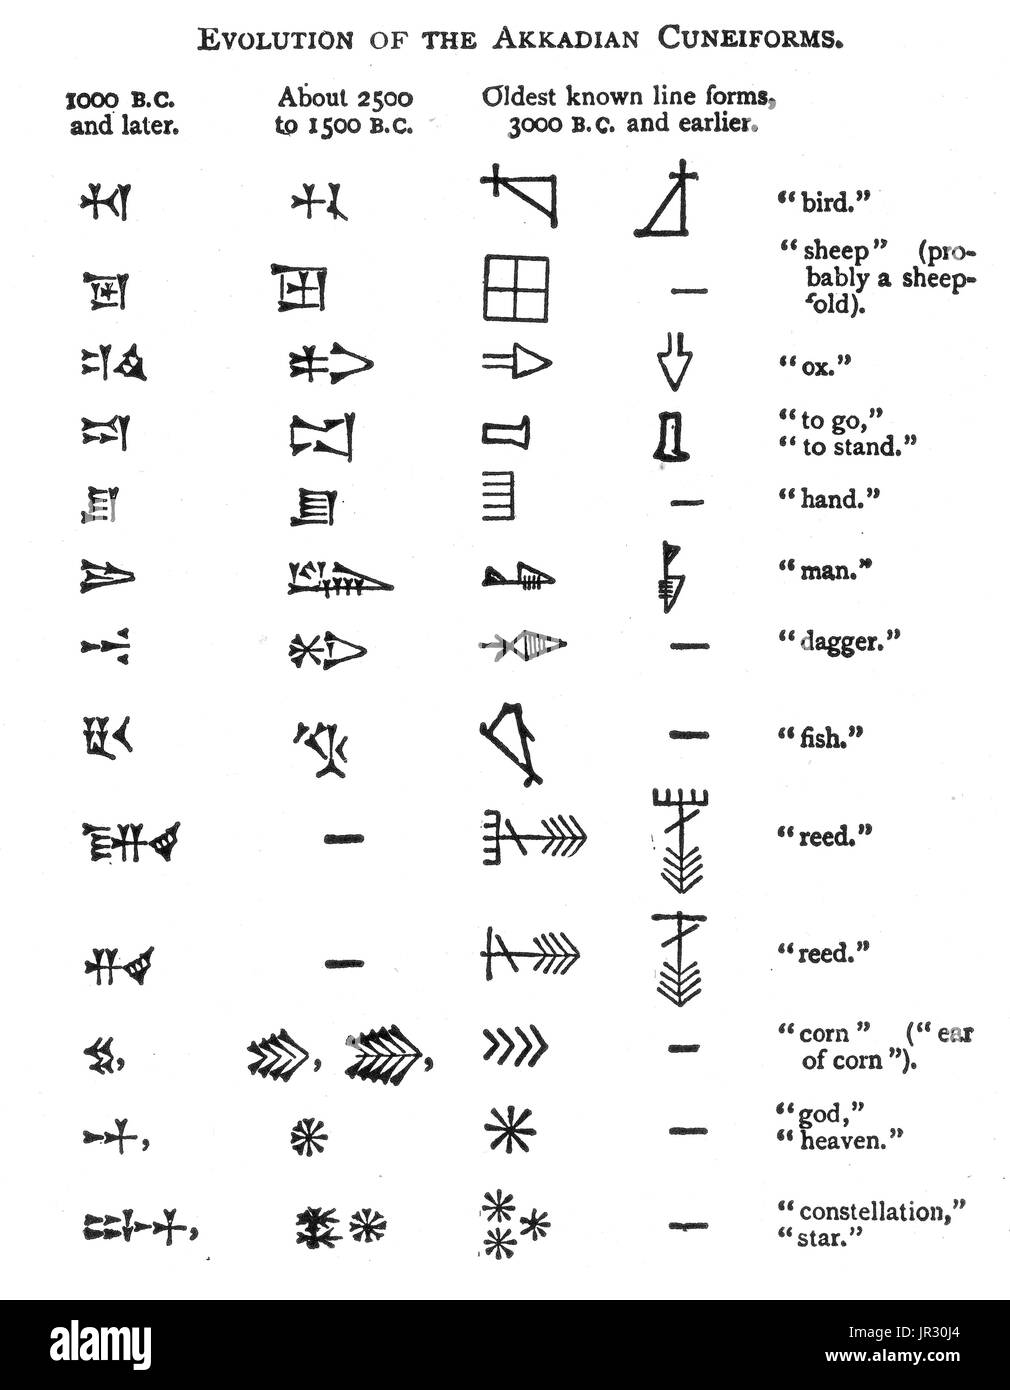 Evolution of Akkadian Cuneiforms Stock Photo